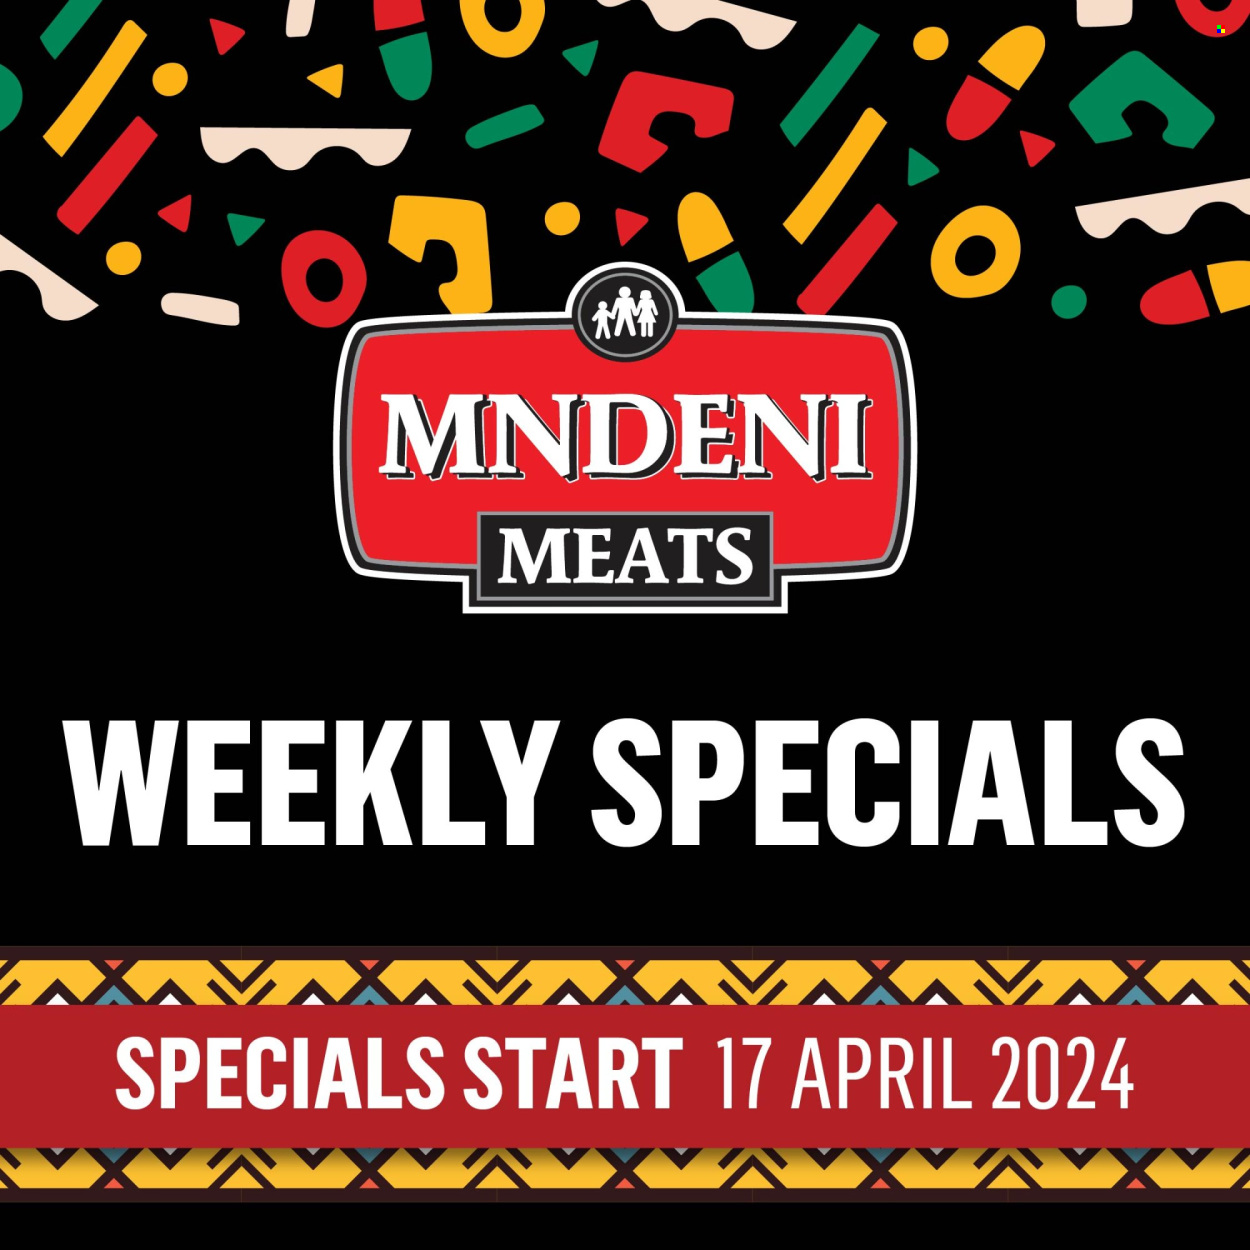 Mndeni Meats specials. 